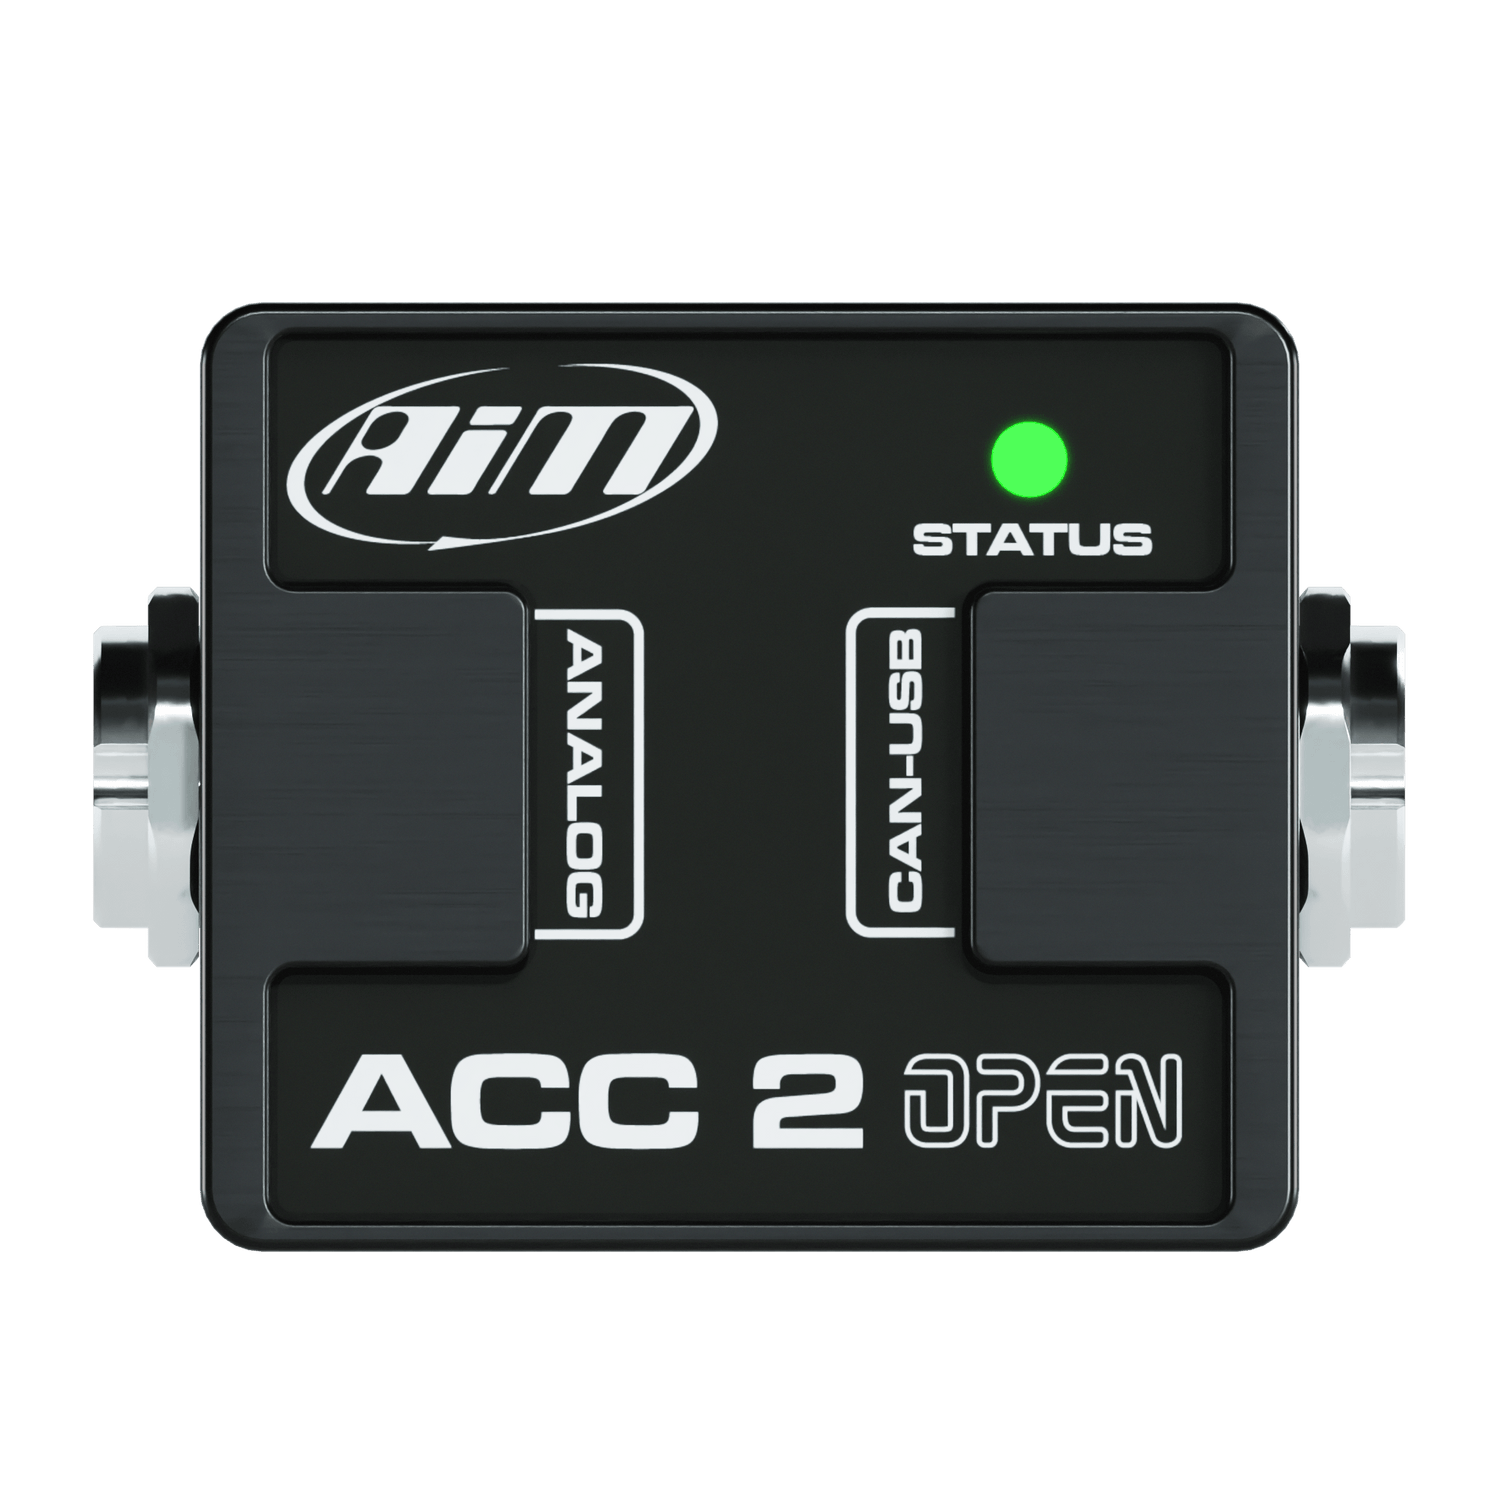 AiM ACC 2 Open Analogue CAN Converter - AimShop.com